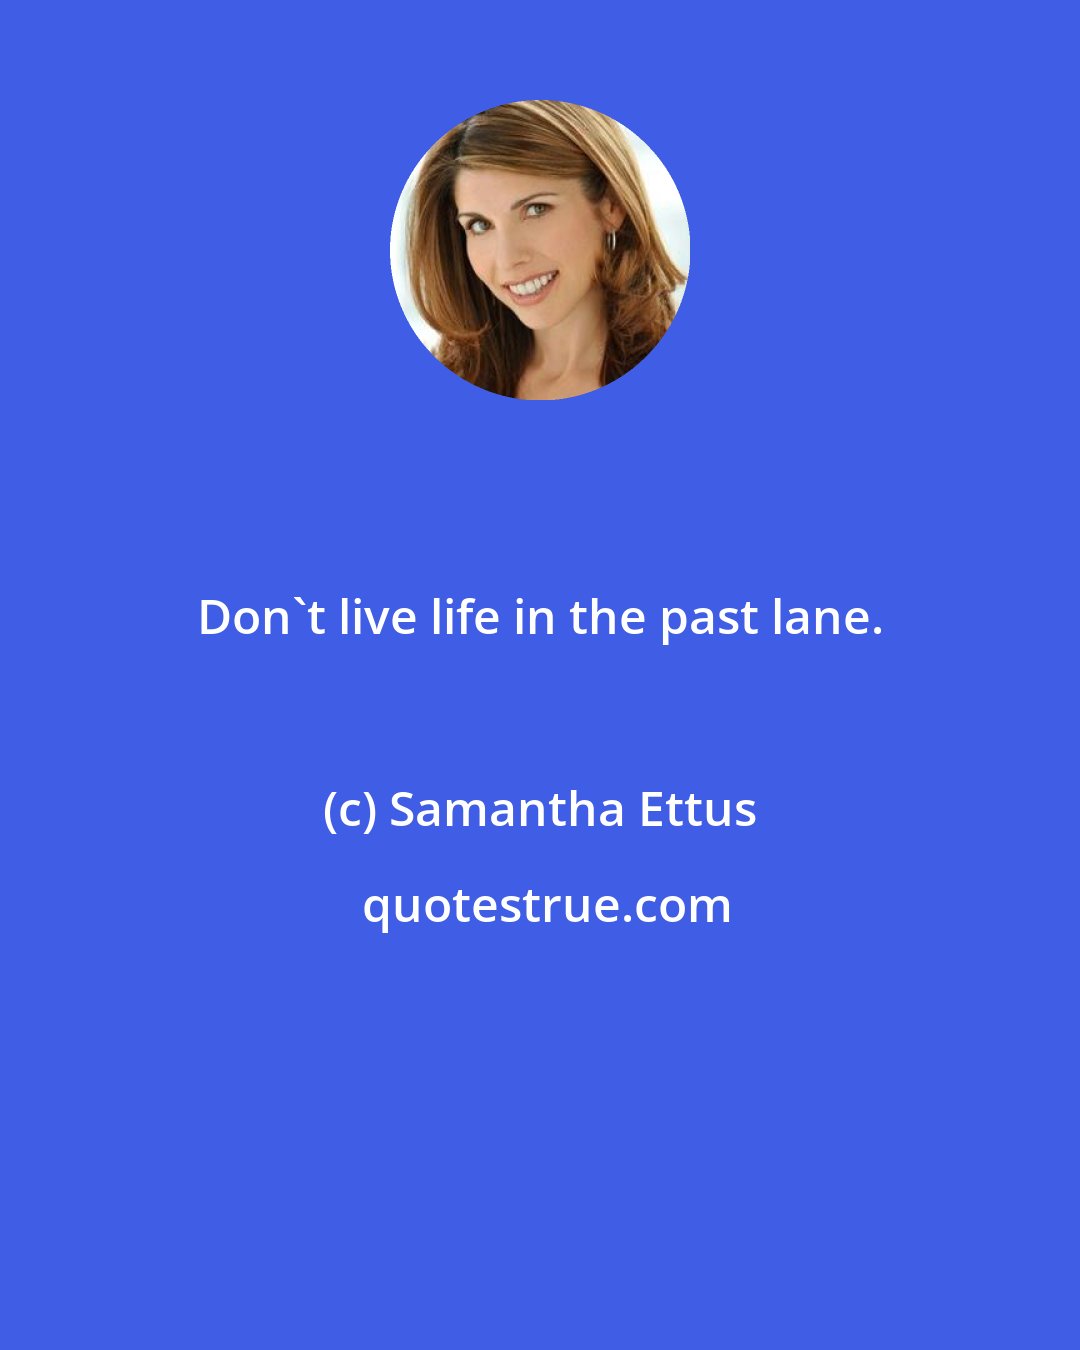 Samantha Ettus: Don't live life in the past lane.